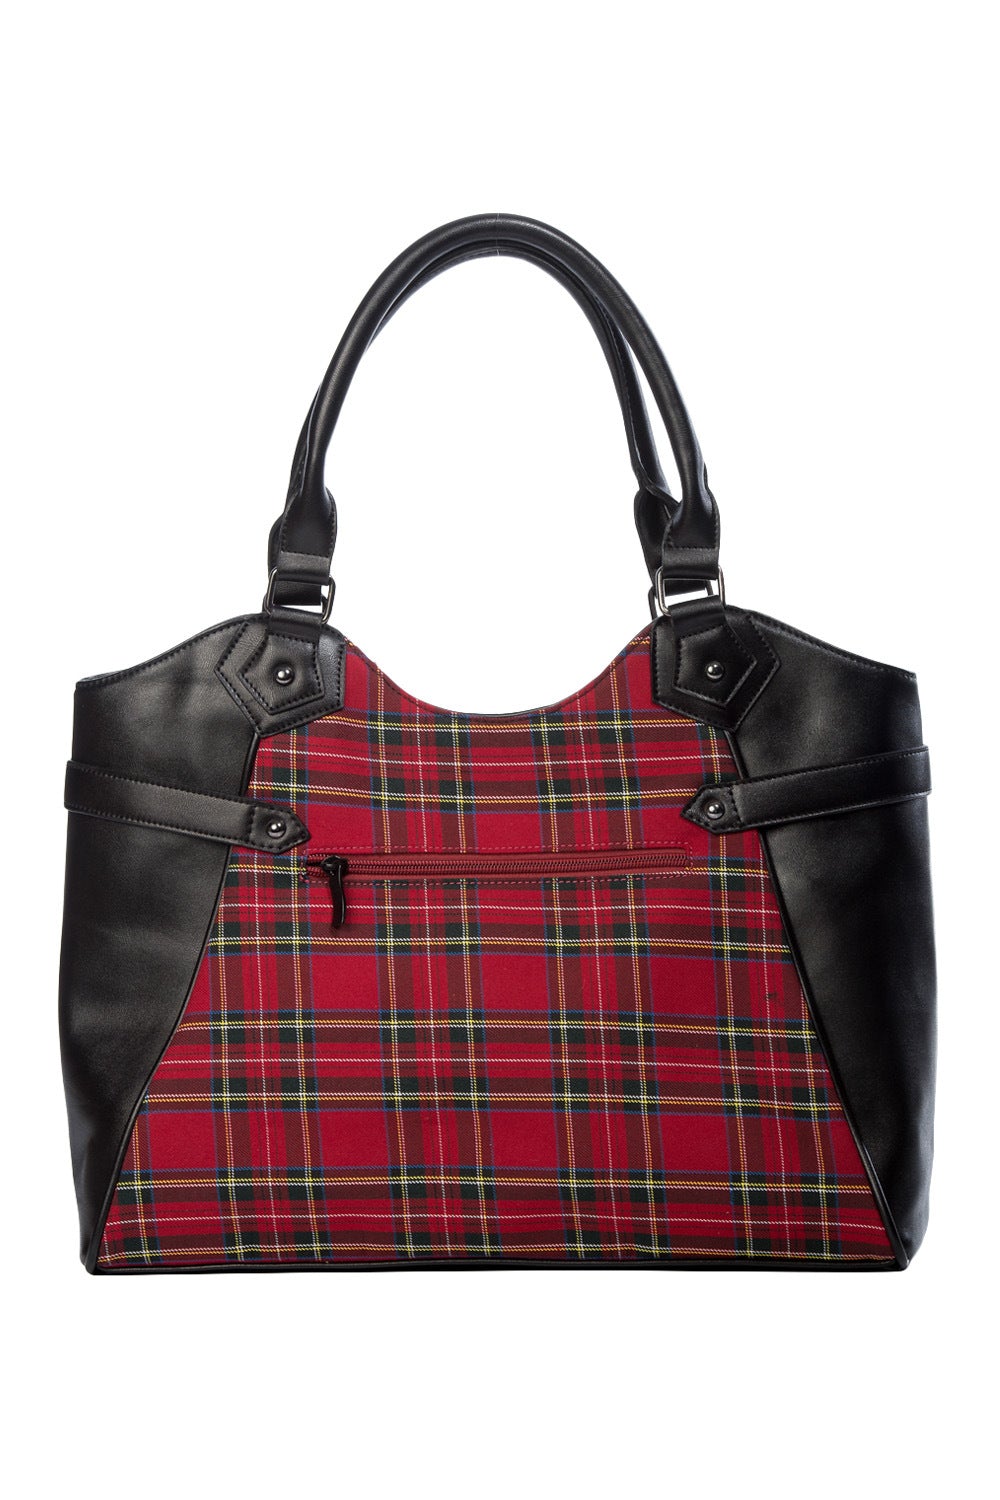 Red tartan handbag with studded pentagram feature.